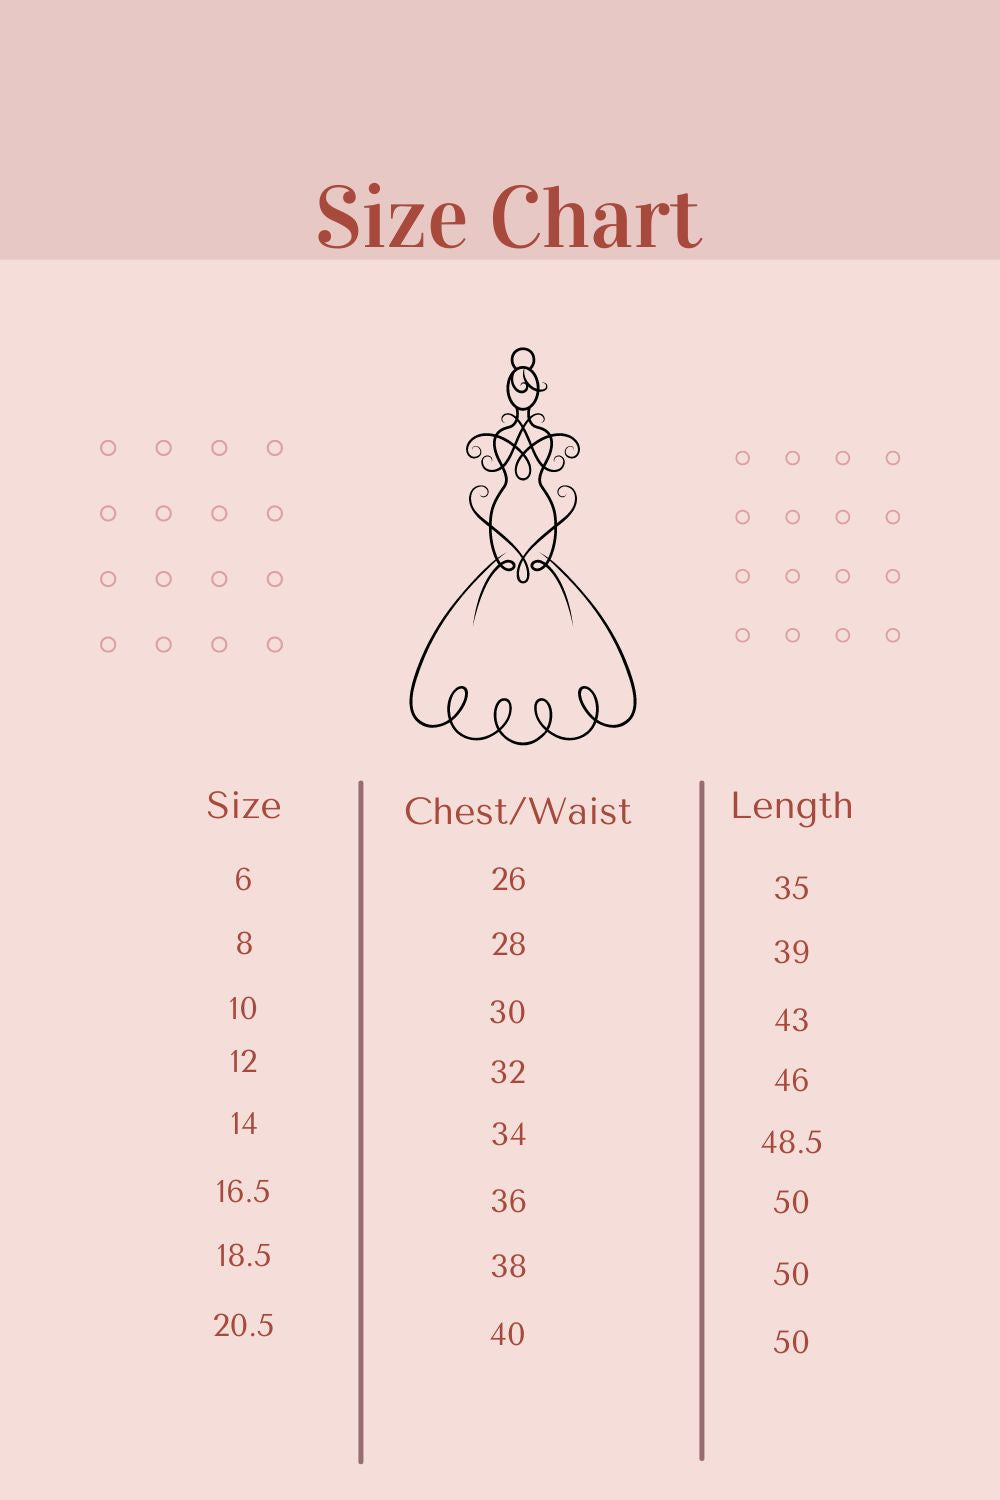 Cording Embellished Lace Sleeve Long Flower Girl Dress by AS554 Kids Dream - Girl Formal Dresses